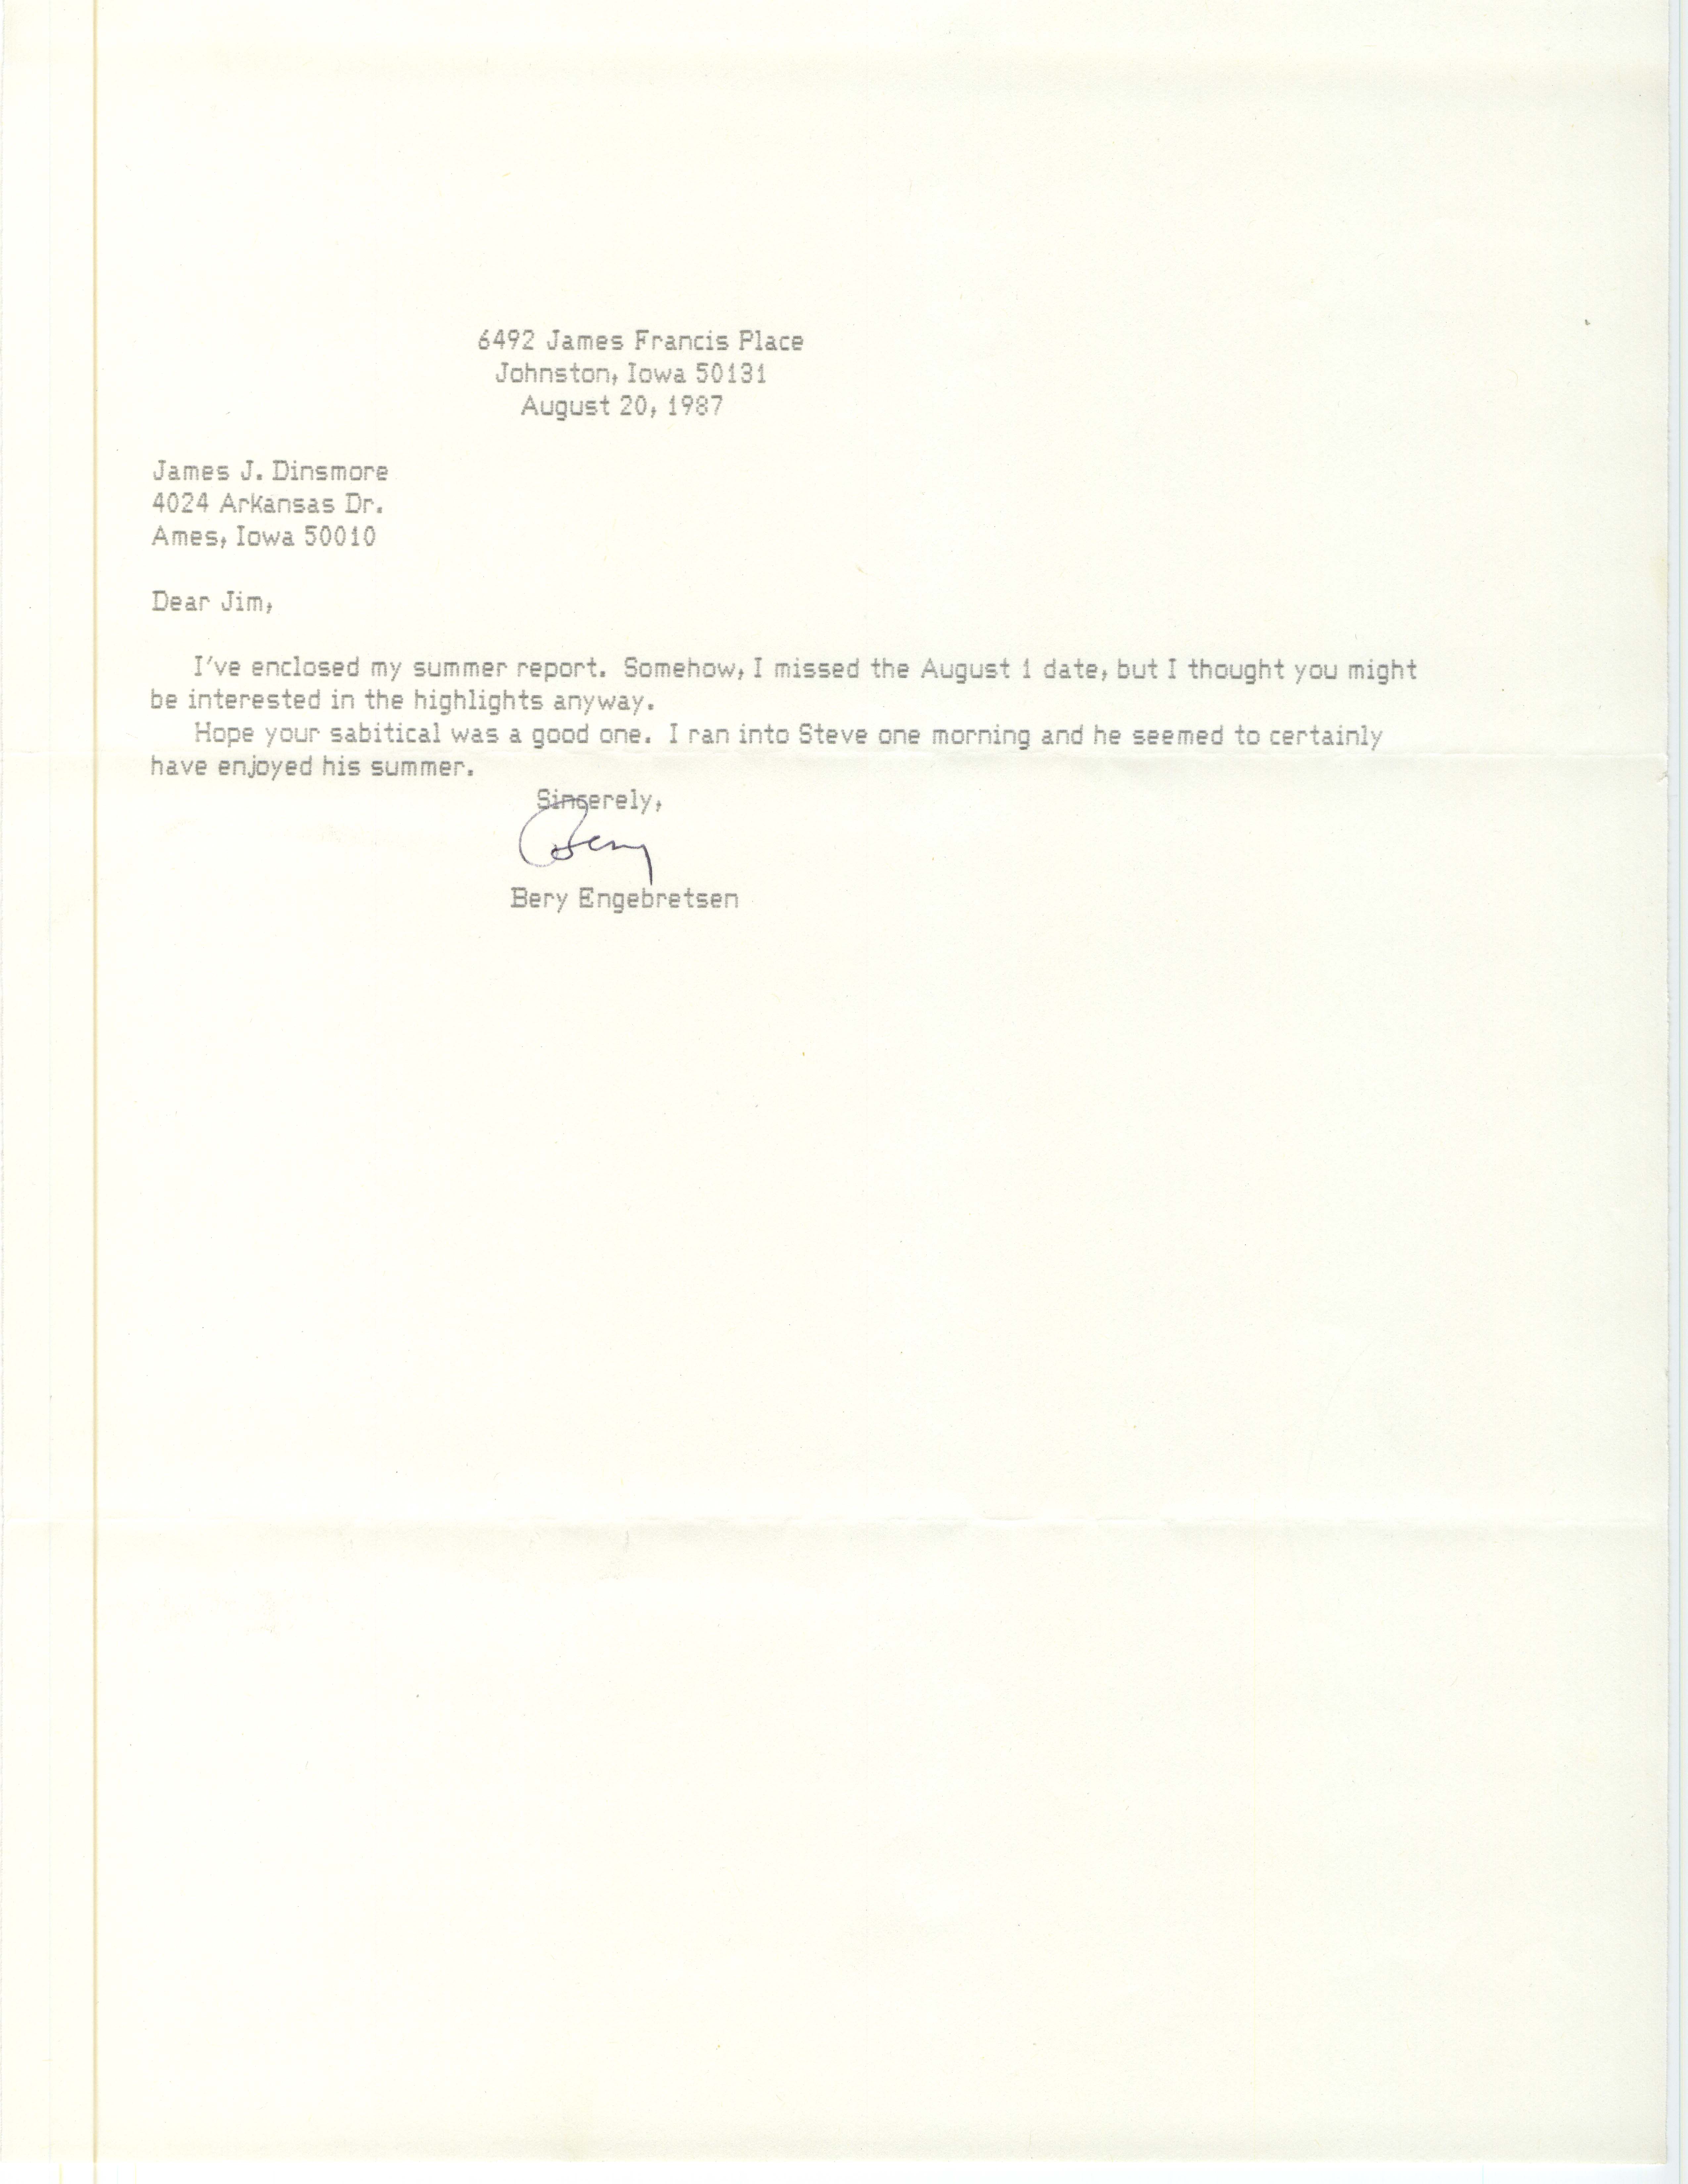 Bery Engebretsen letter to James J. Dinsmore regarding summer bird sightings, August 20, 1987